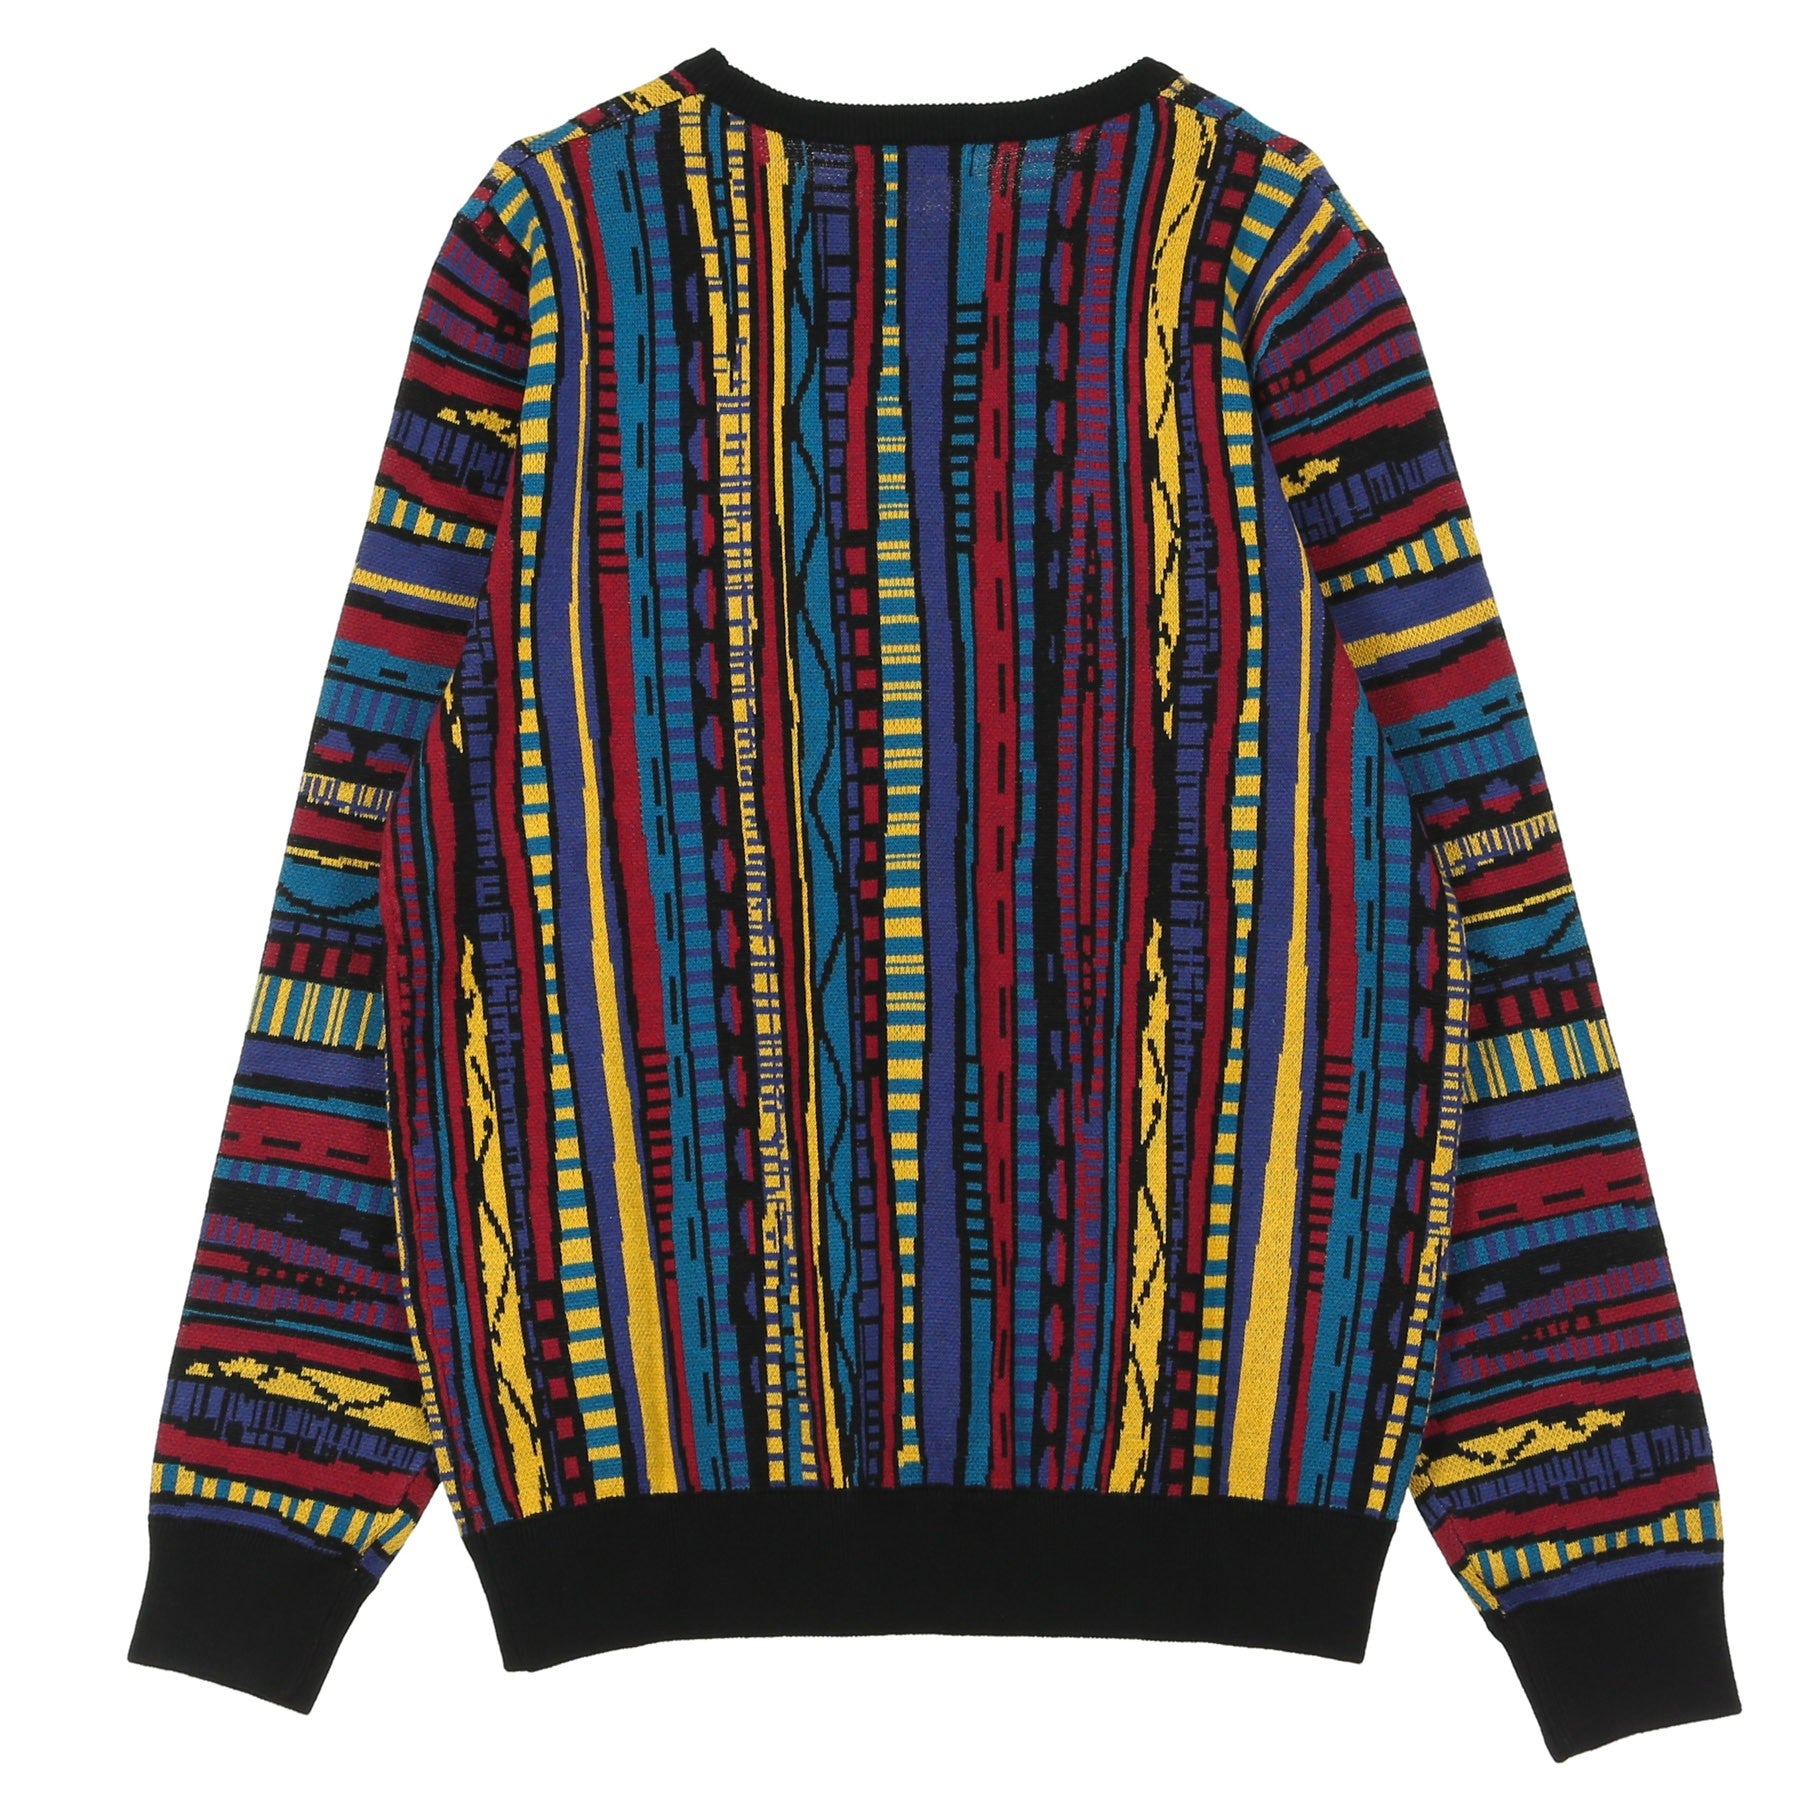 Theodore Knit Men's Lightweight Sweater Multi